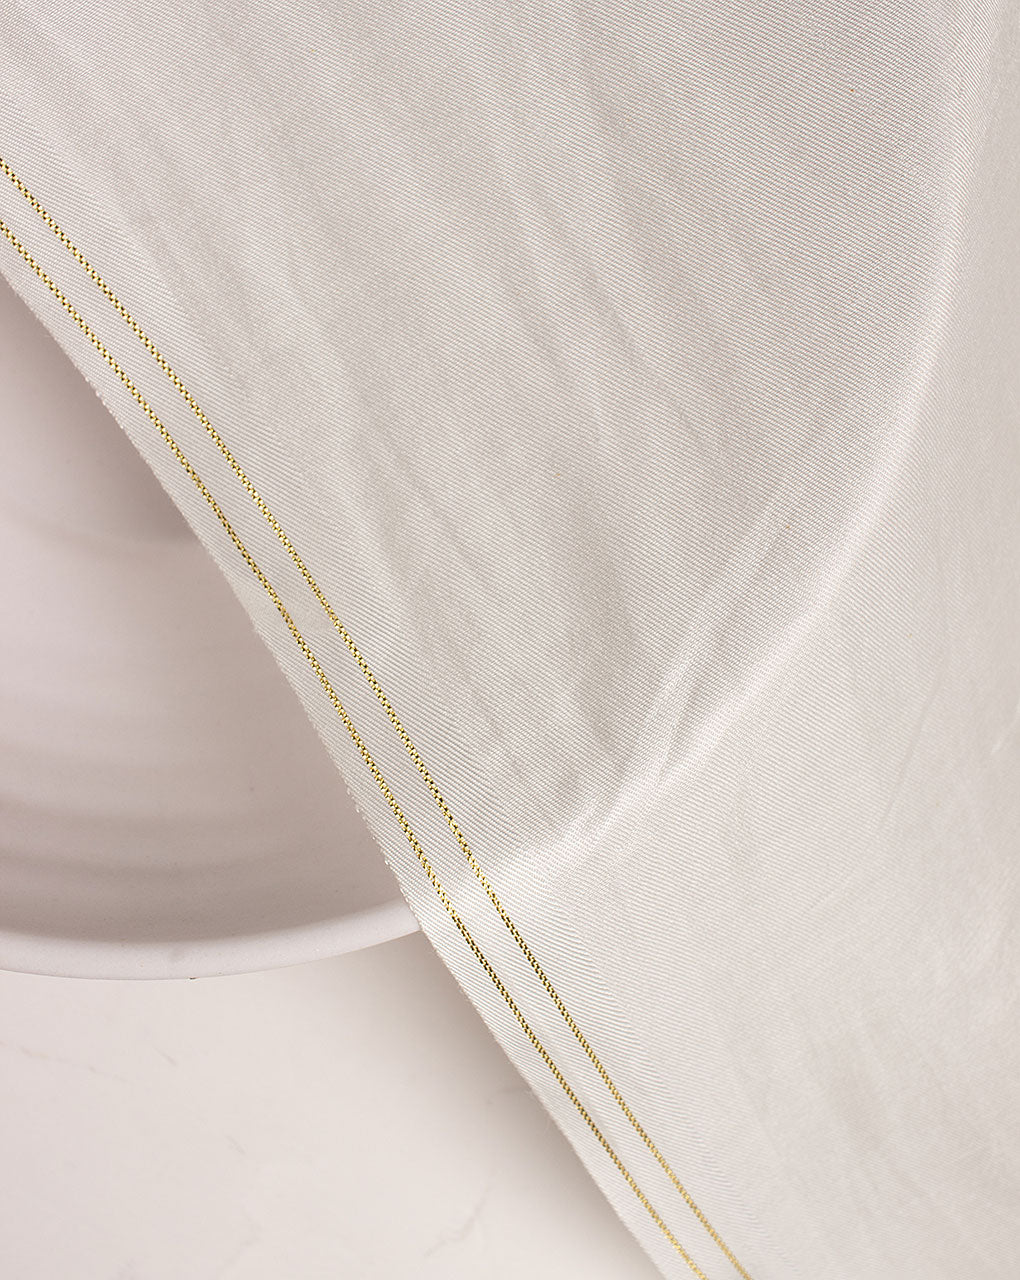 Dyeable Liva VFY Modal ( Gaji Japan Silk ) Fabric - Fabriclore.com